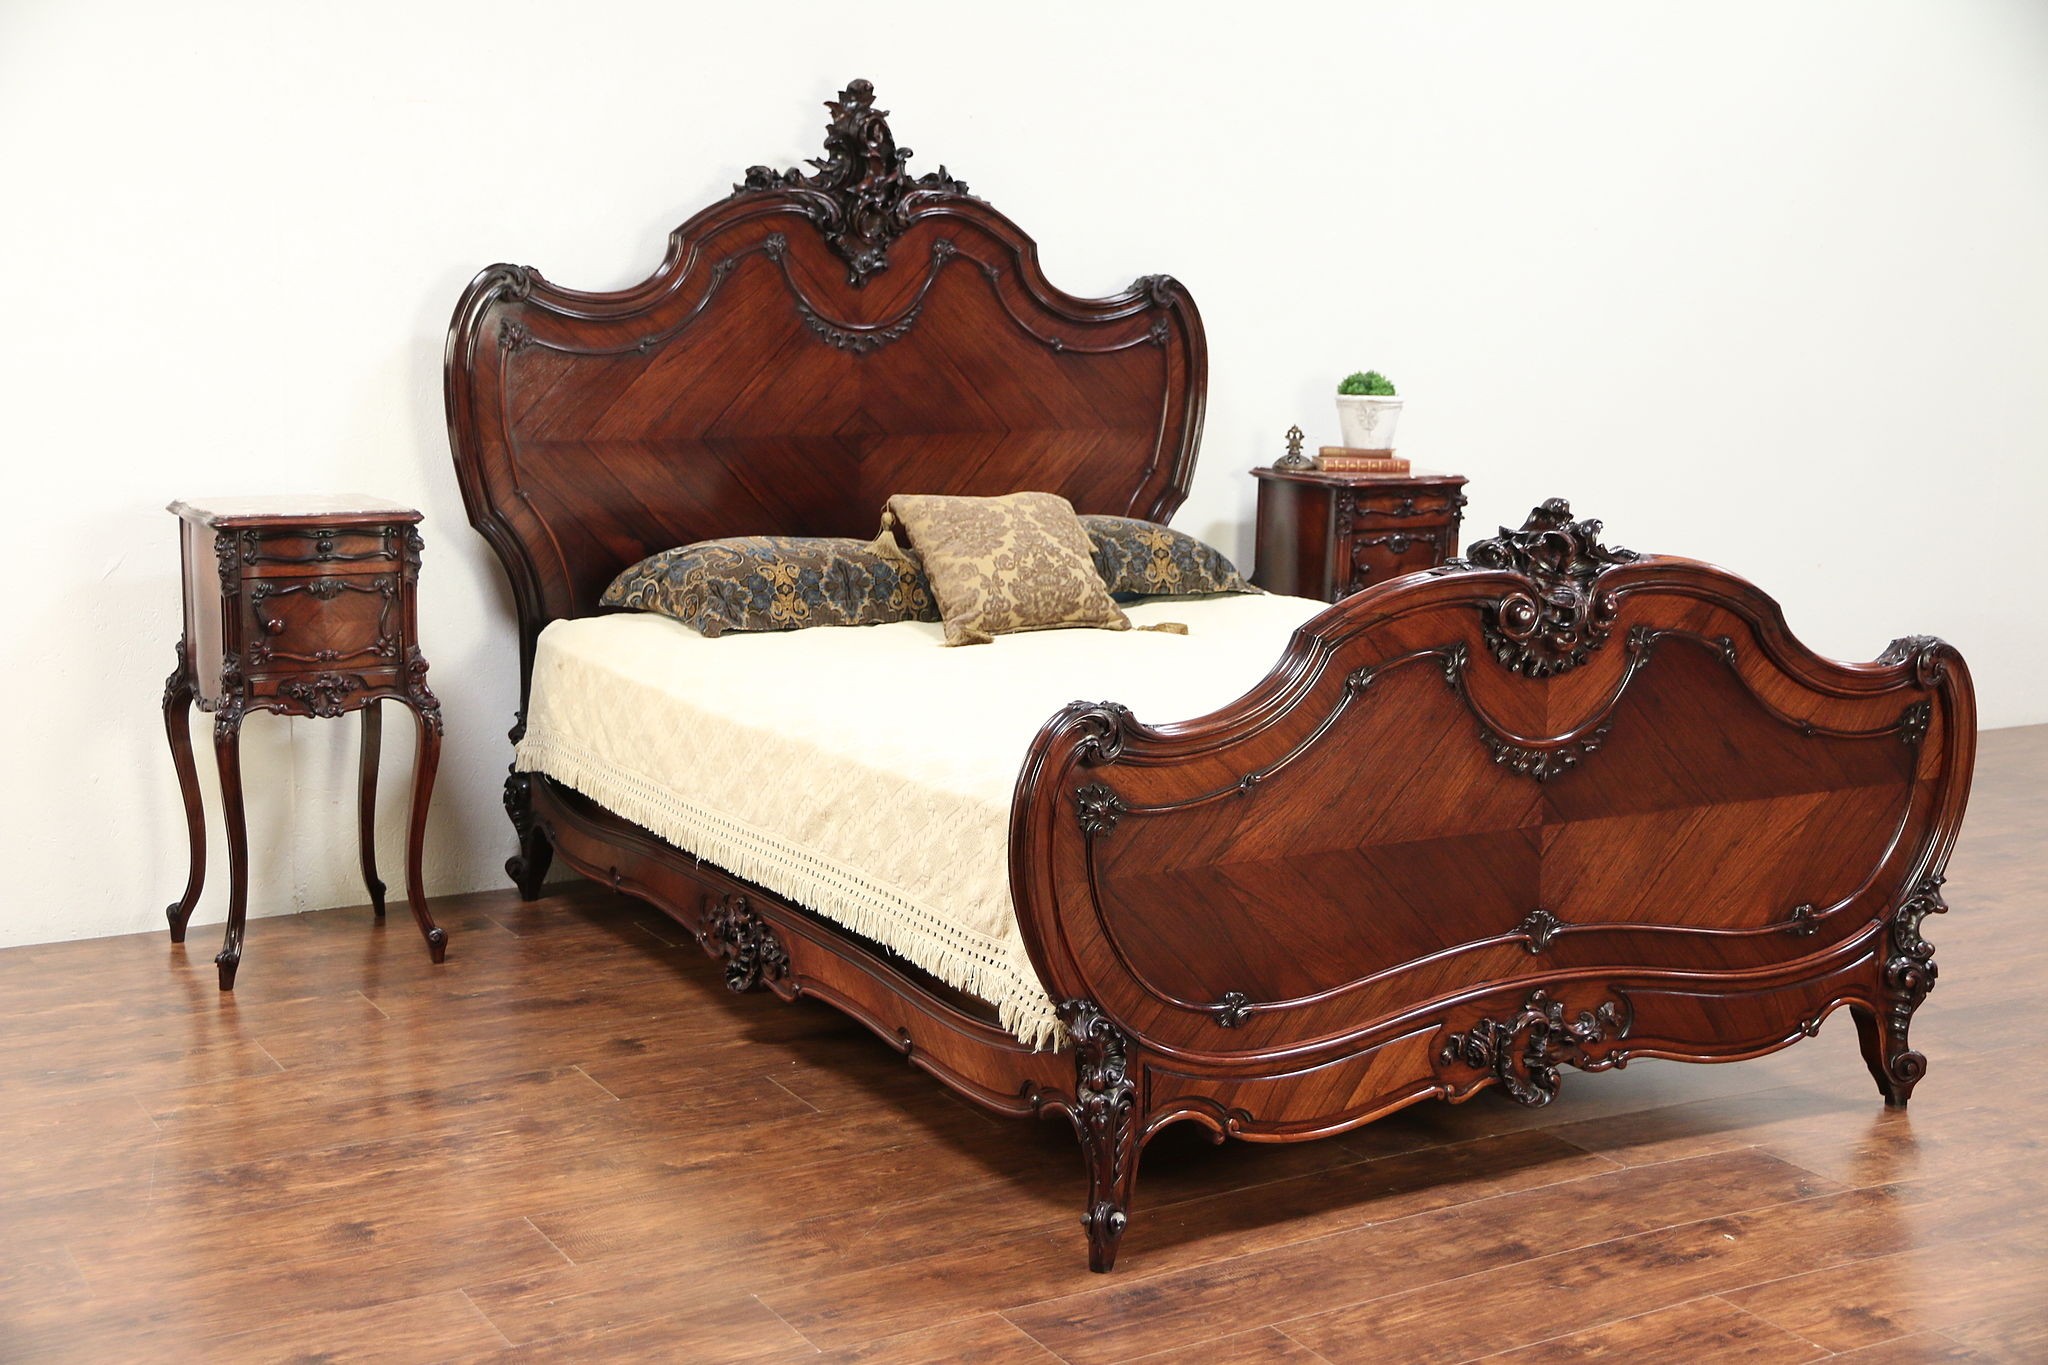 rosewood bedroom furniture singapore